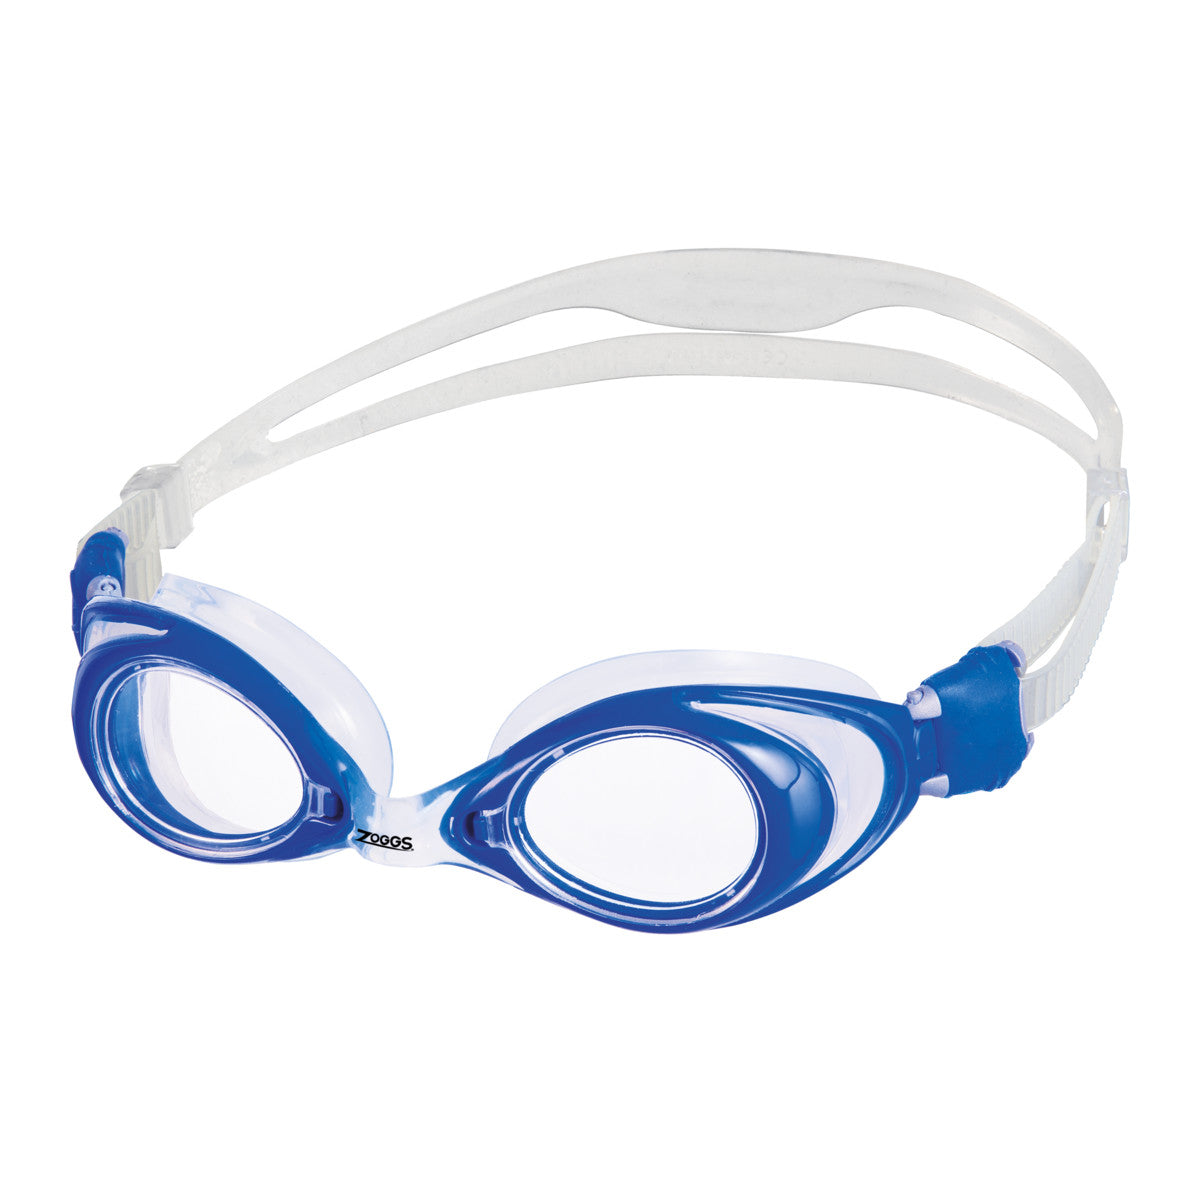 ZOGGS Vision Optical Corrective Goggle משקפת שחייה בצבע כחול/לבן עם עדשות אופטיות שקופה